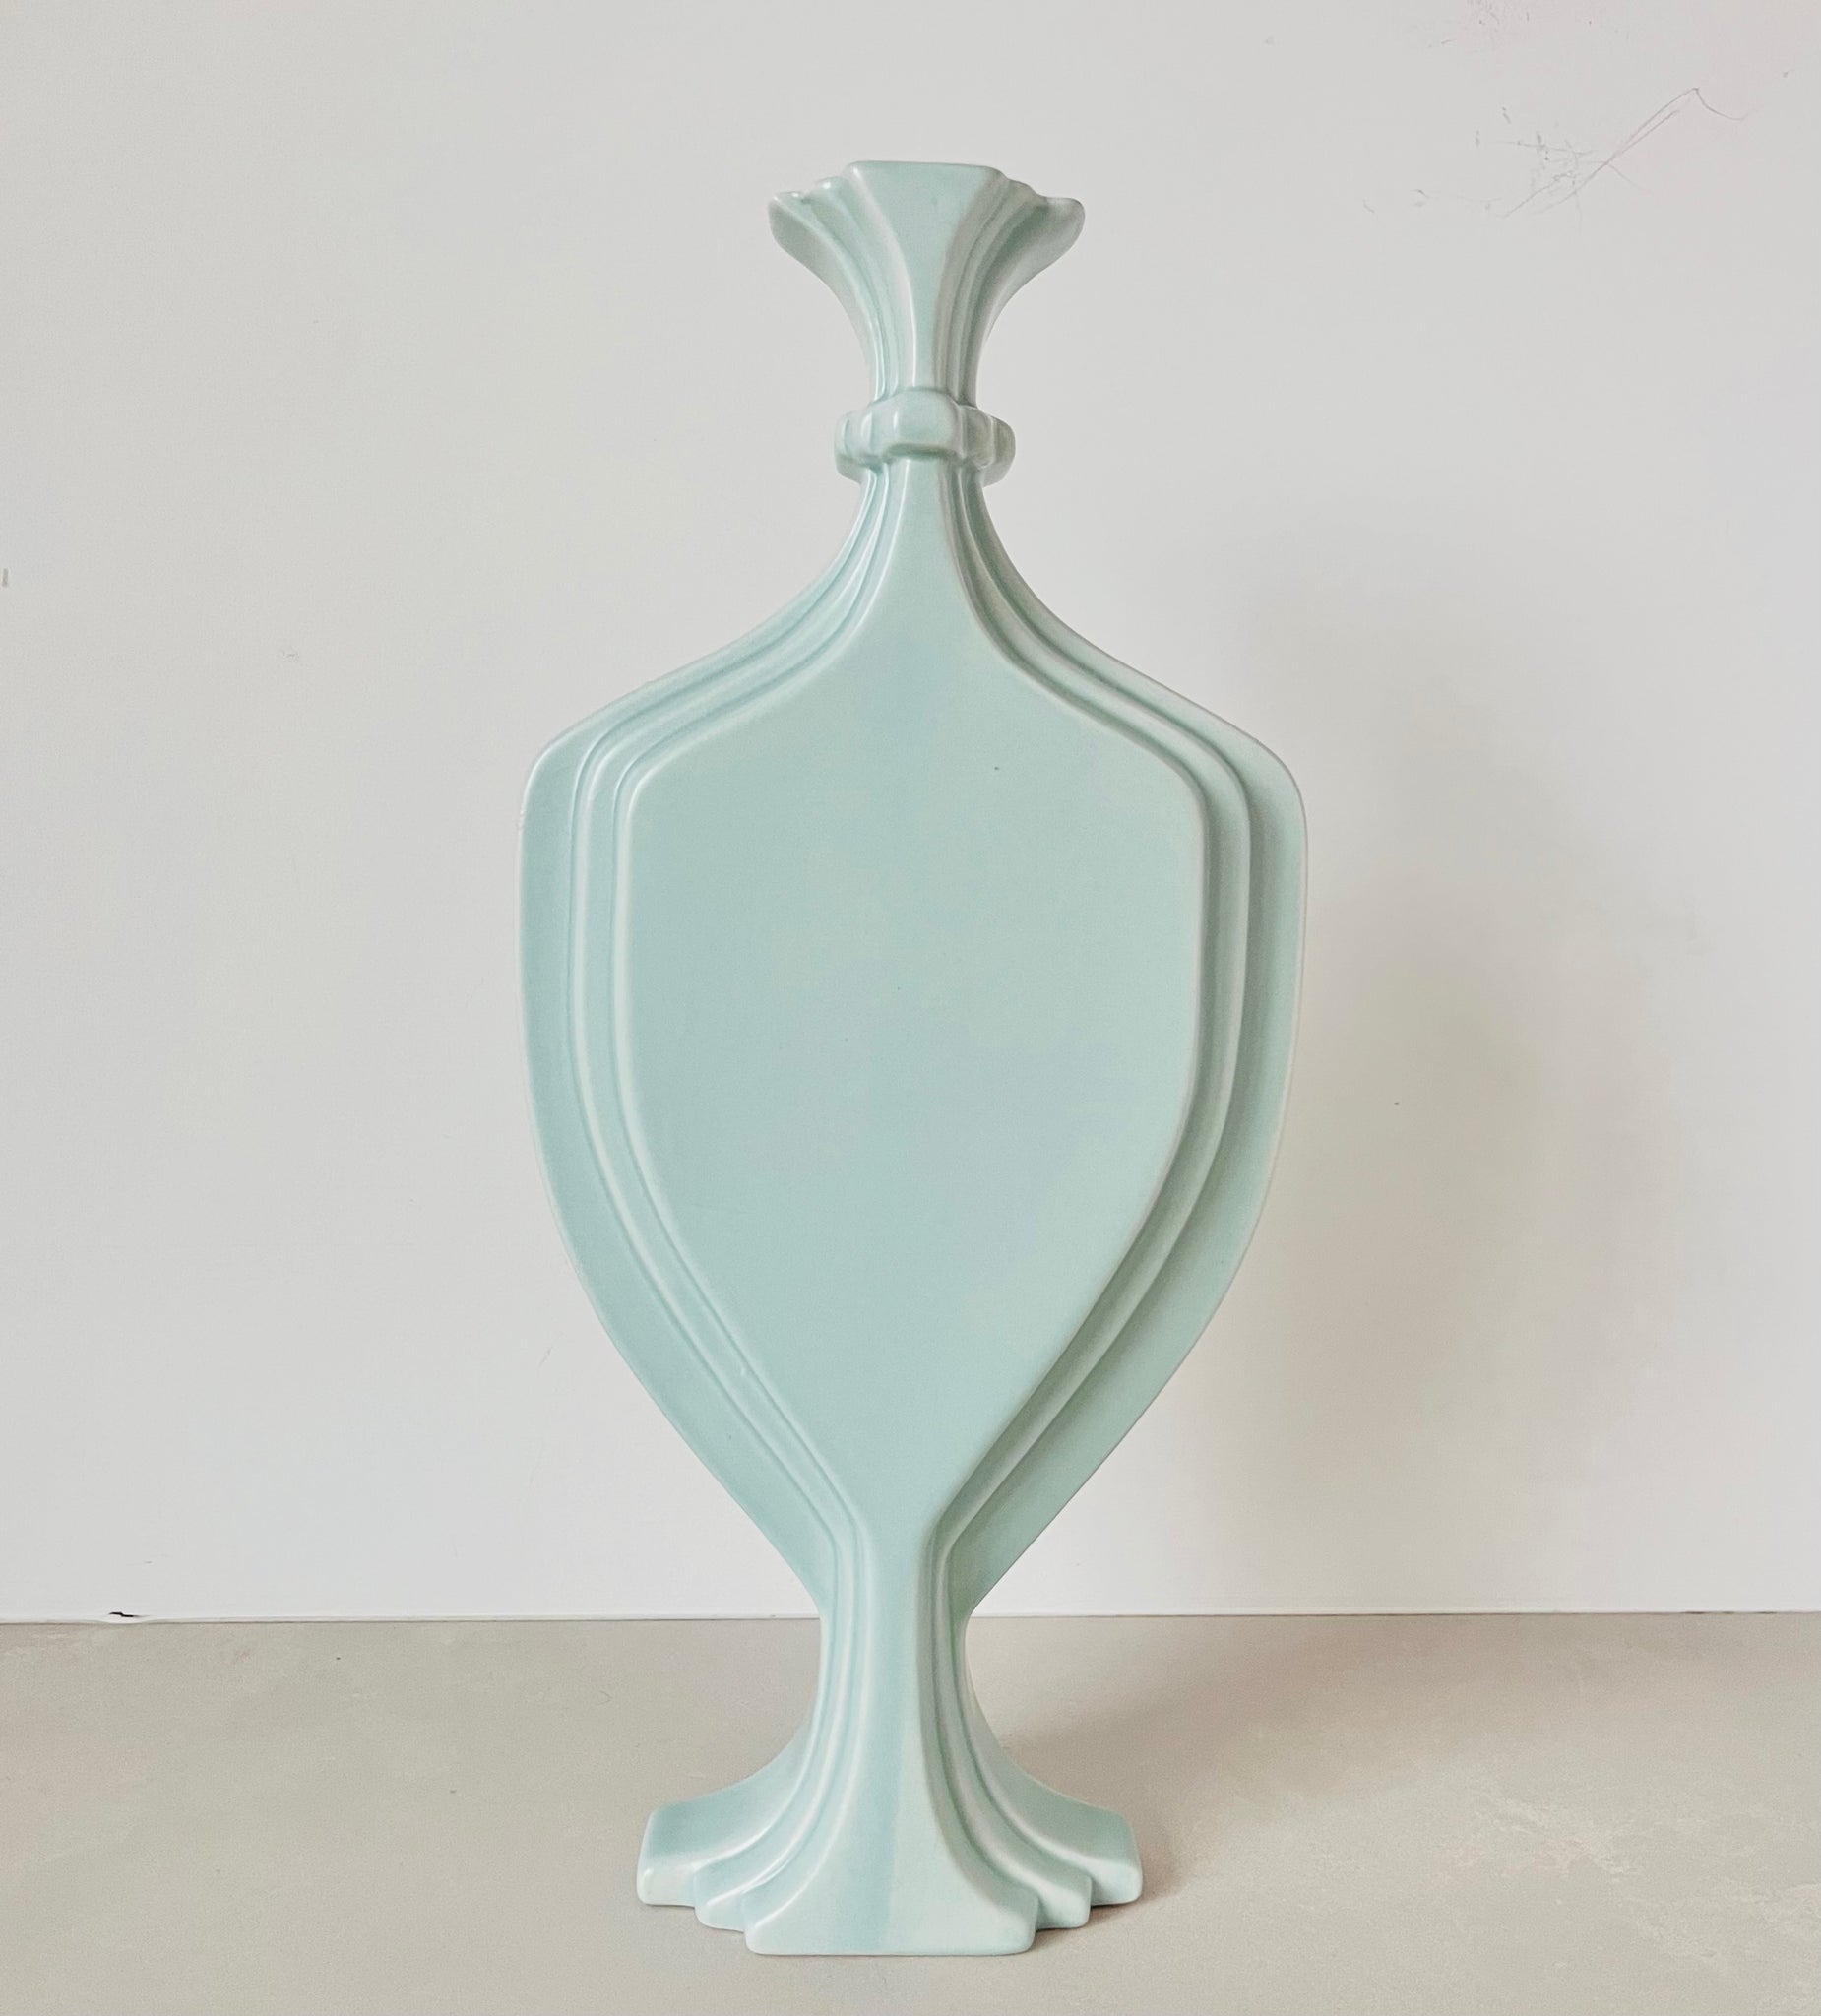 Art Deco inspired Global Views Tall "sliced" Vase